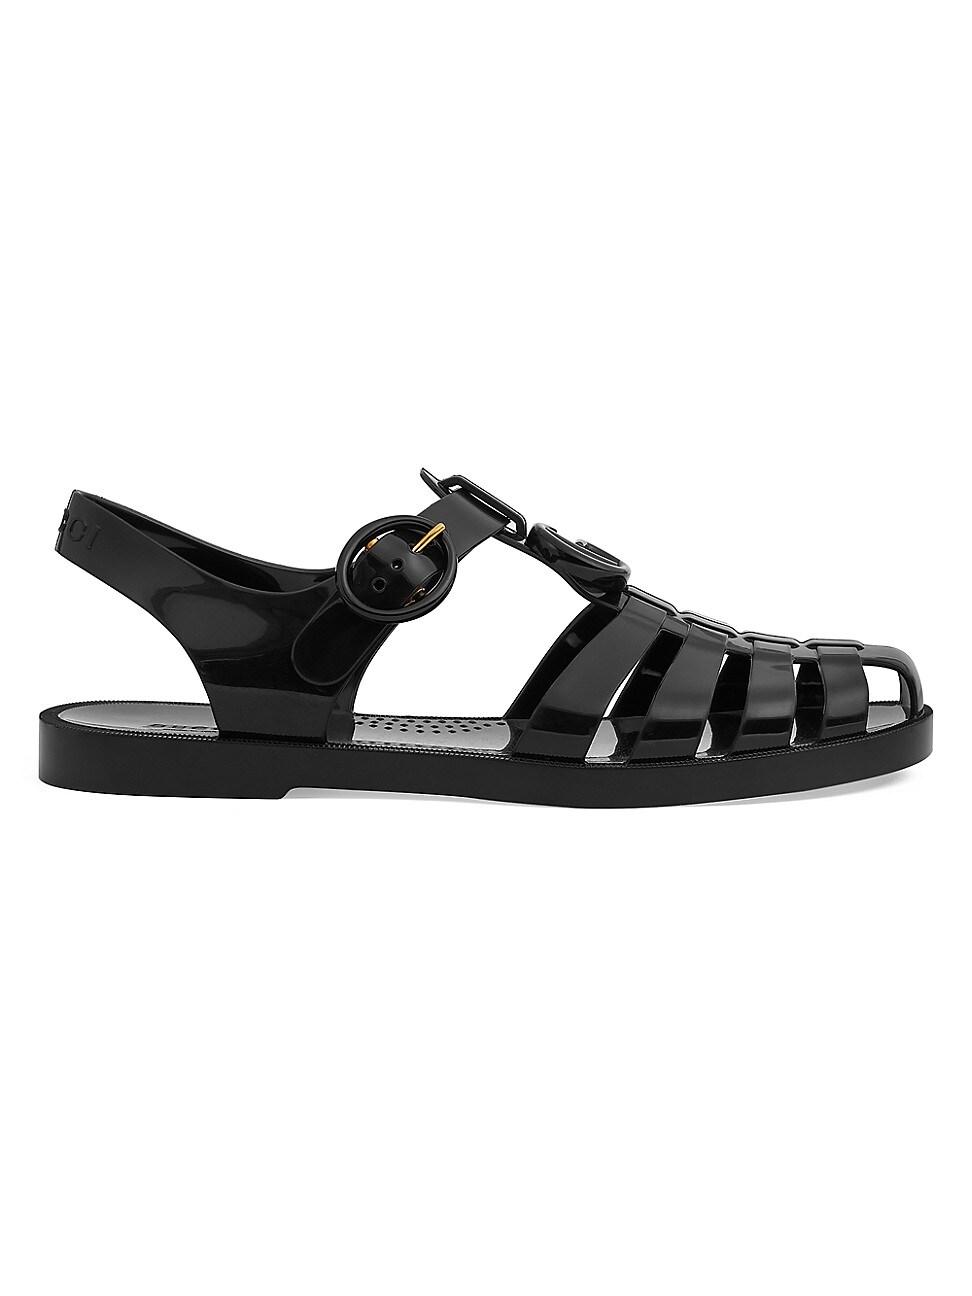 Gucci Rubber Fisherman Sandals in Black | Lyst